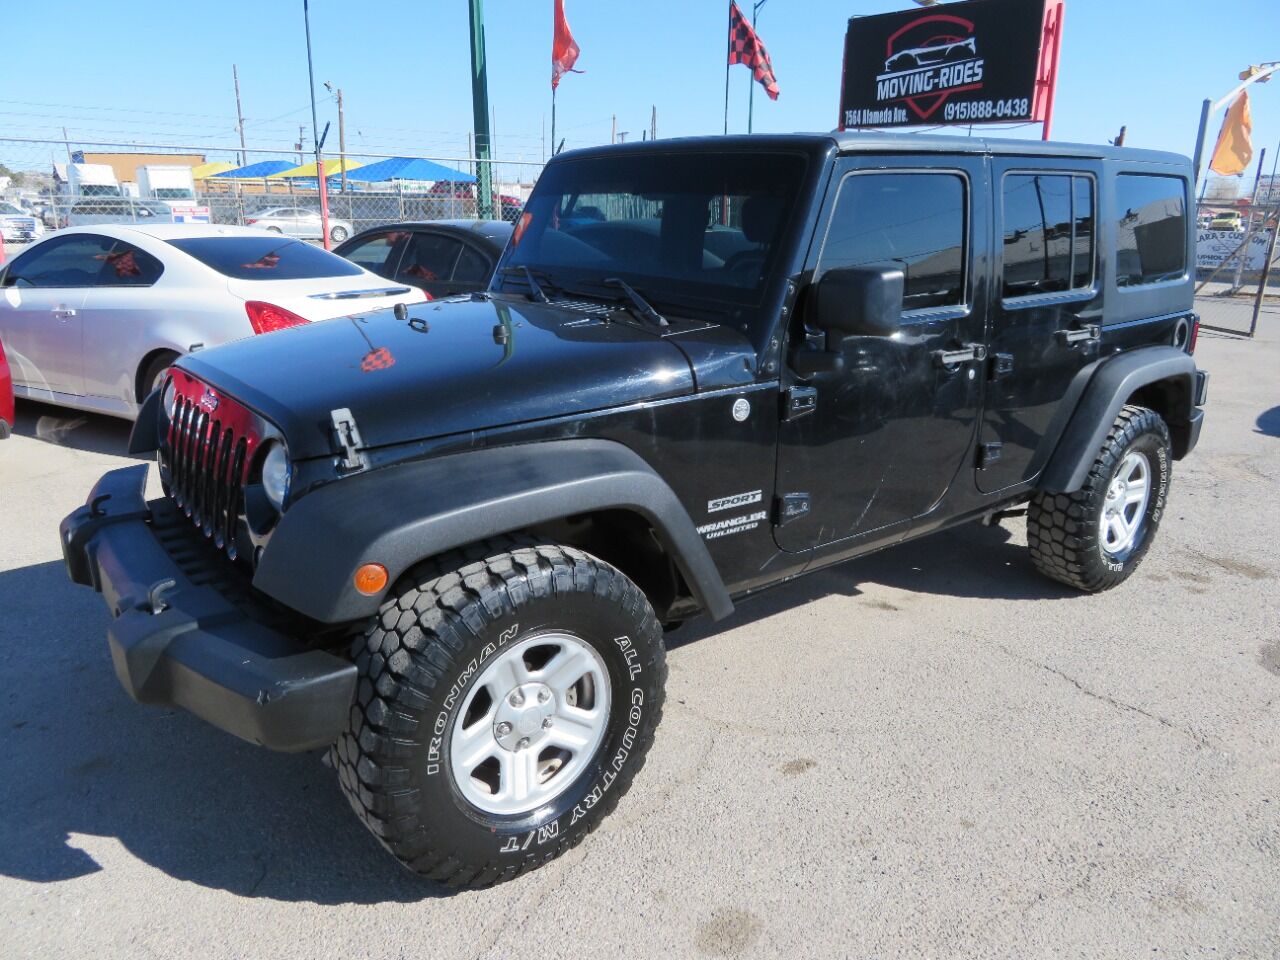 Jeep Wrangler For Sale In El Paso, TX ®